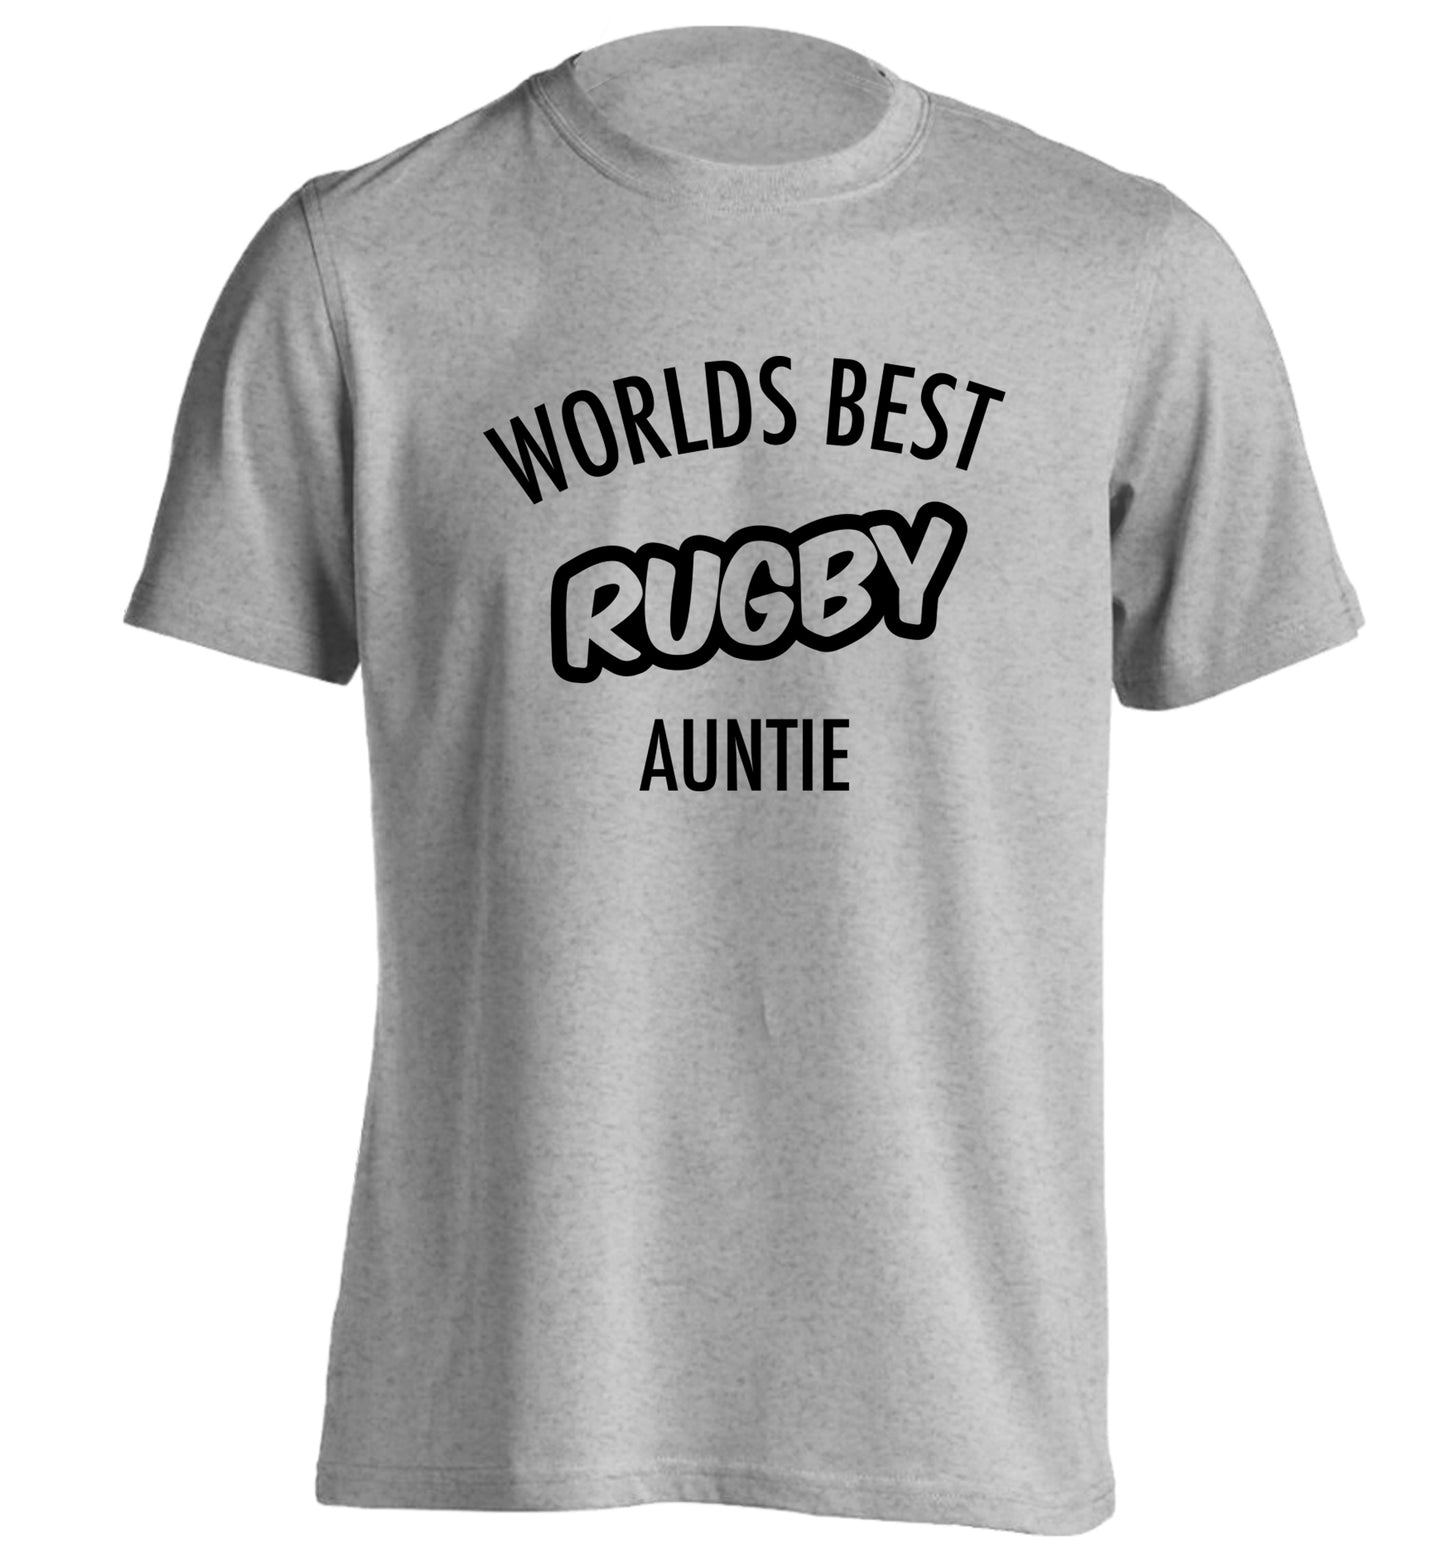 Worlds best rugby auntie adults unisex grey Tshirt 2XL